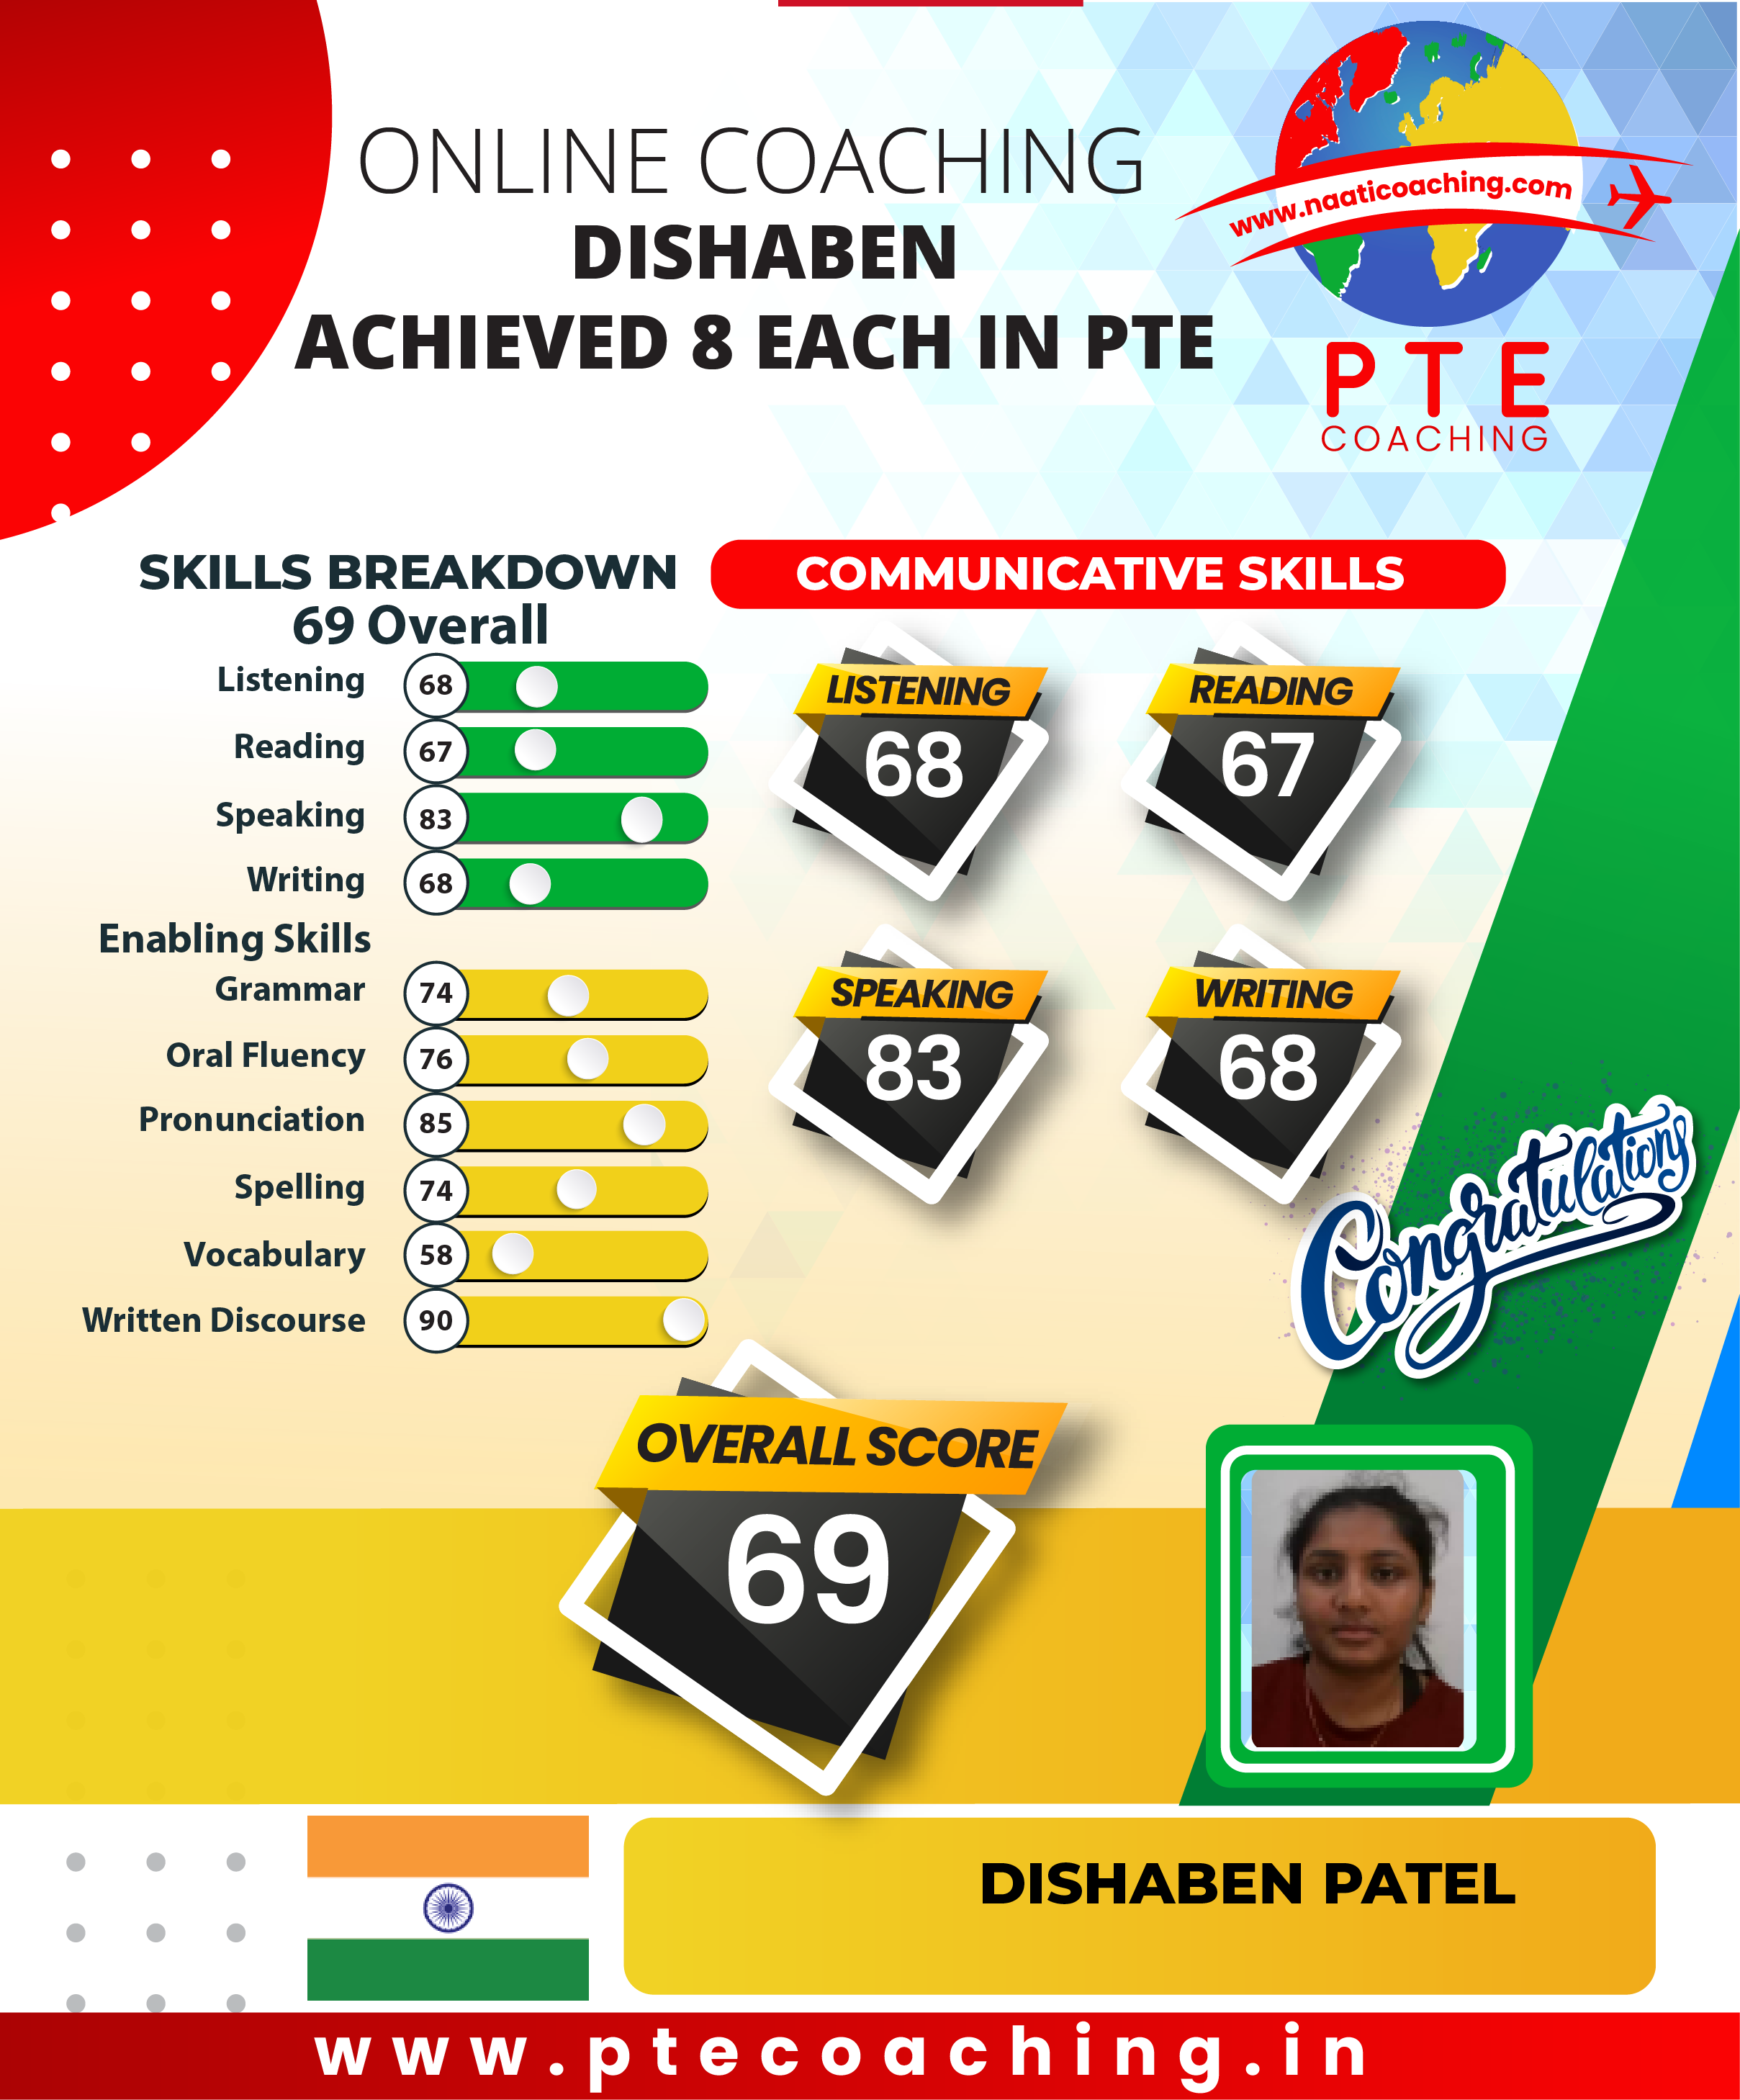 PTE Coaching Scorecard - Dishaben achieved 8 each in PTE